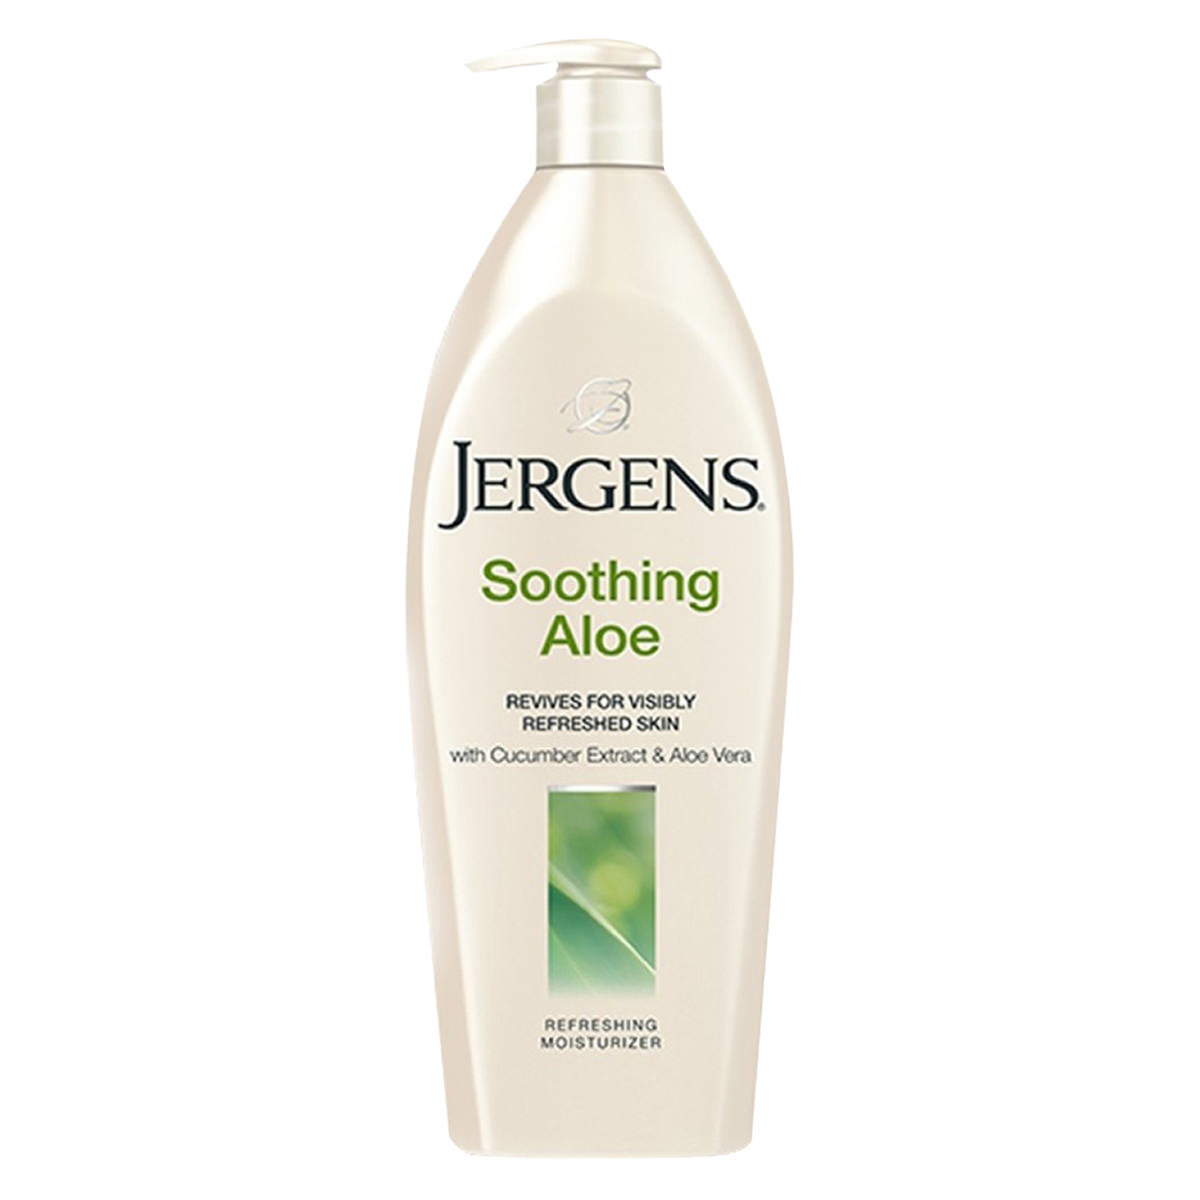 Jergens-Soothing-Aloe-Refreshing-Moisturizer-sfw(1)